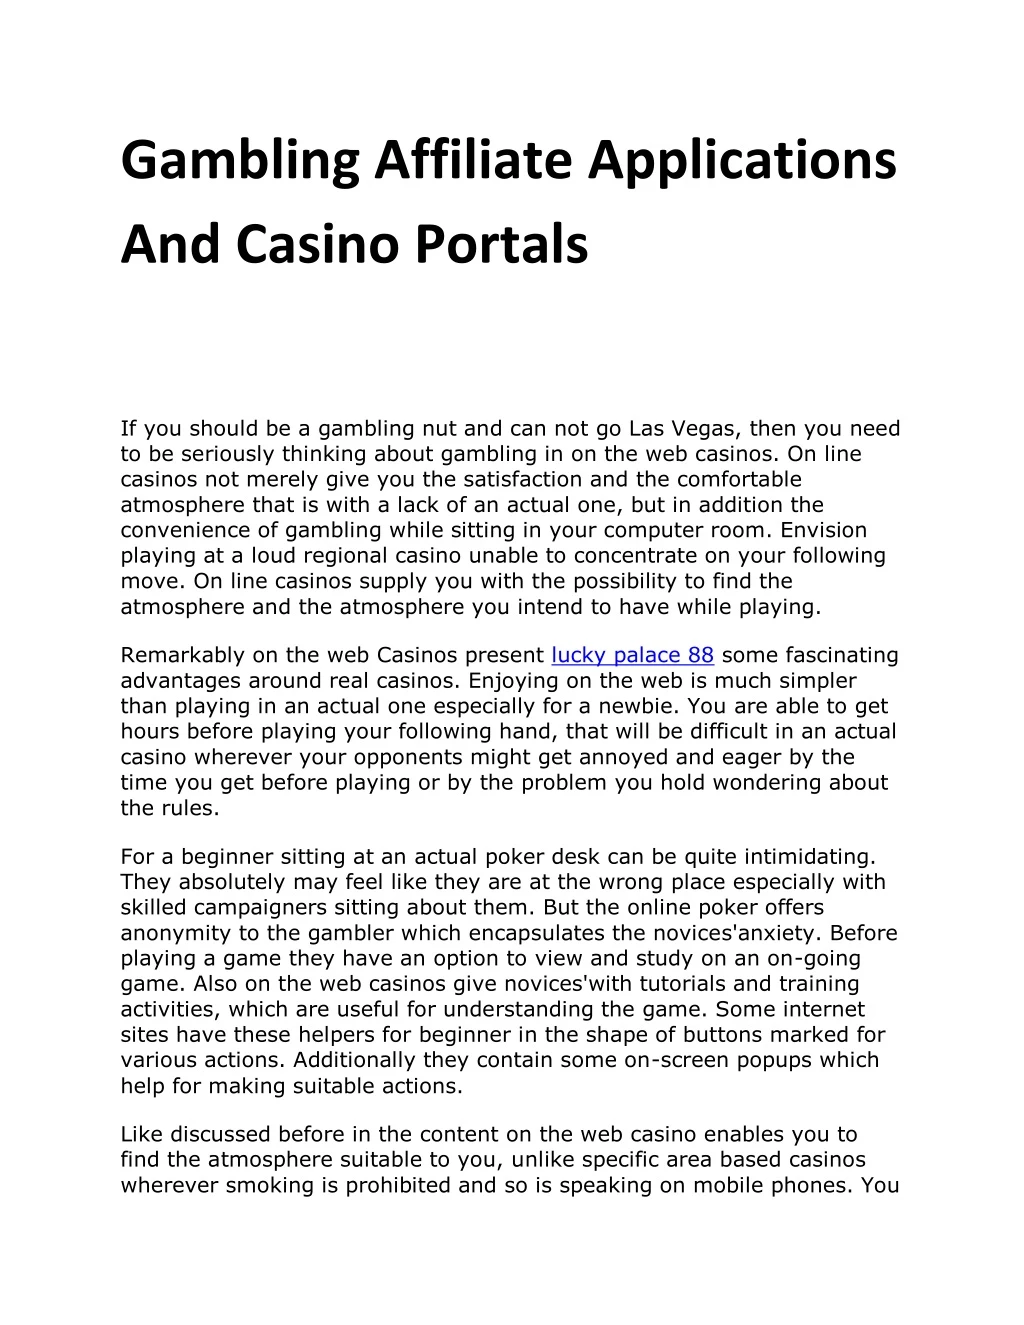 gambling affiliate applications and casino portals